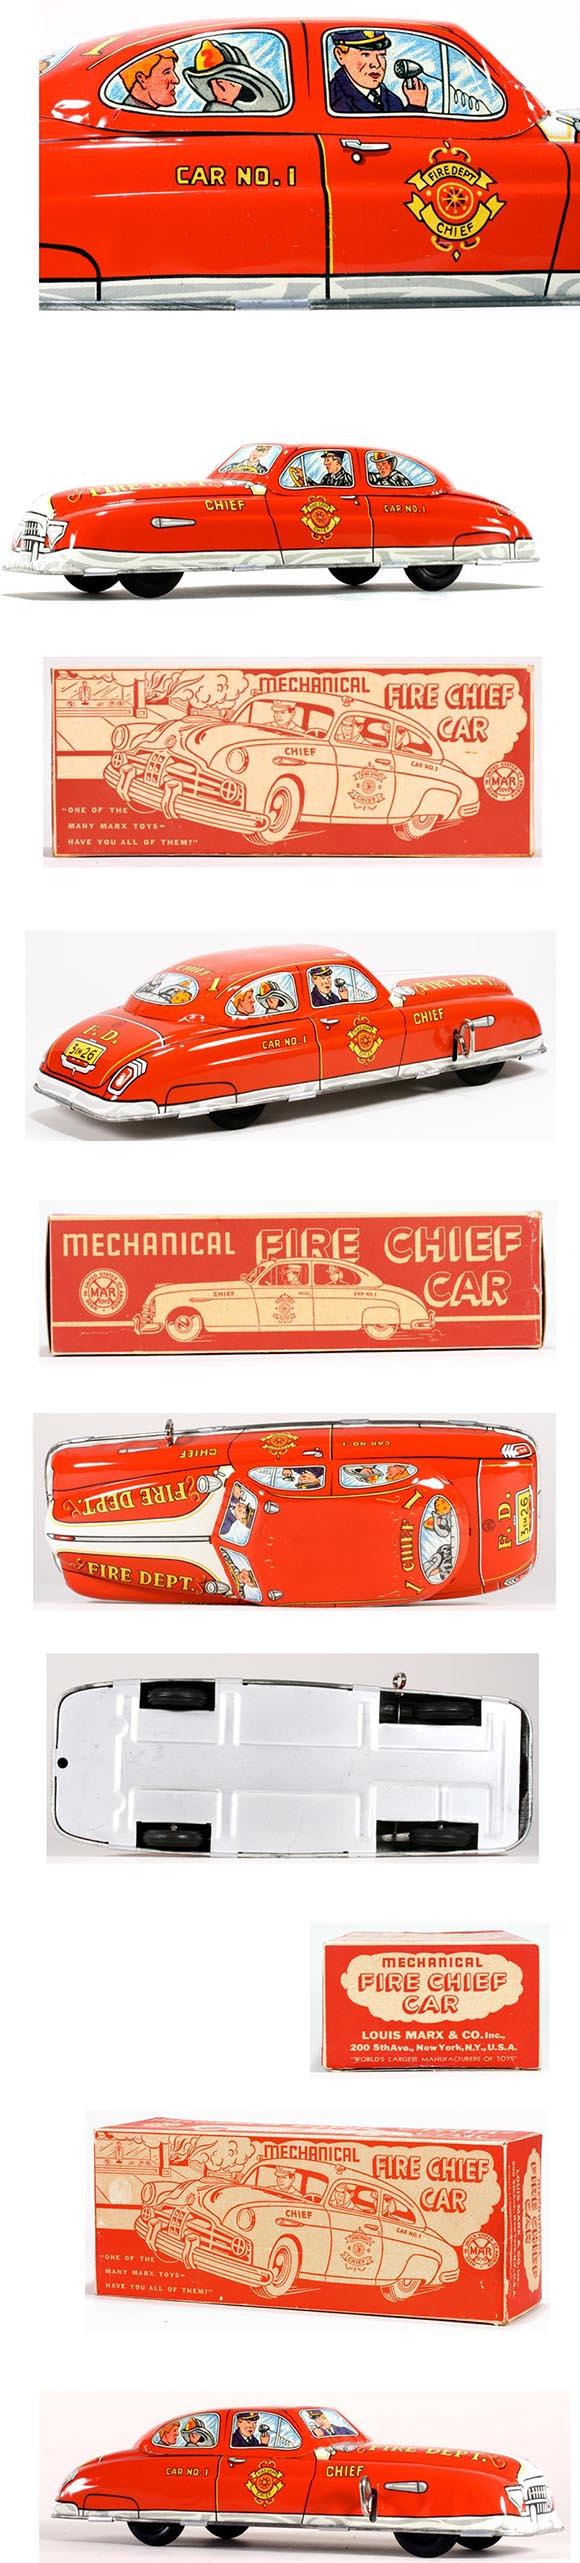 1950 Marx, Mechanical Fire Chief Car in Original Box